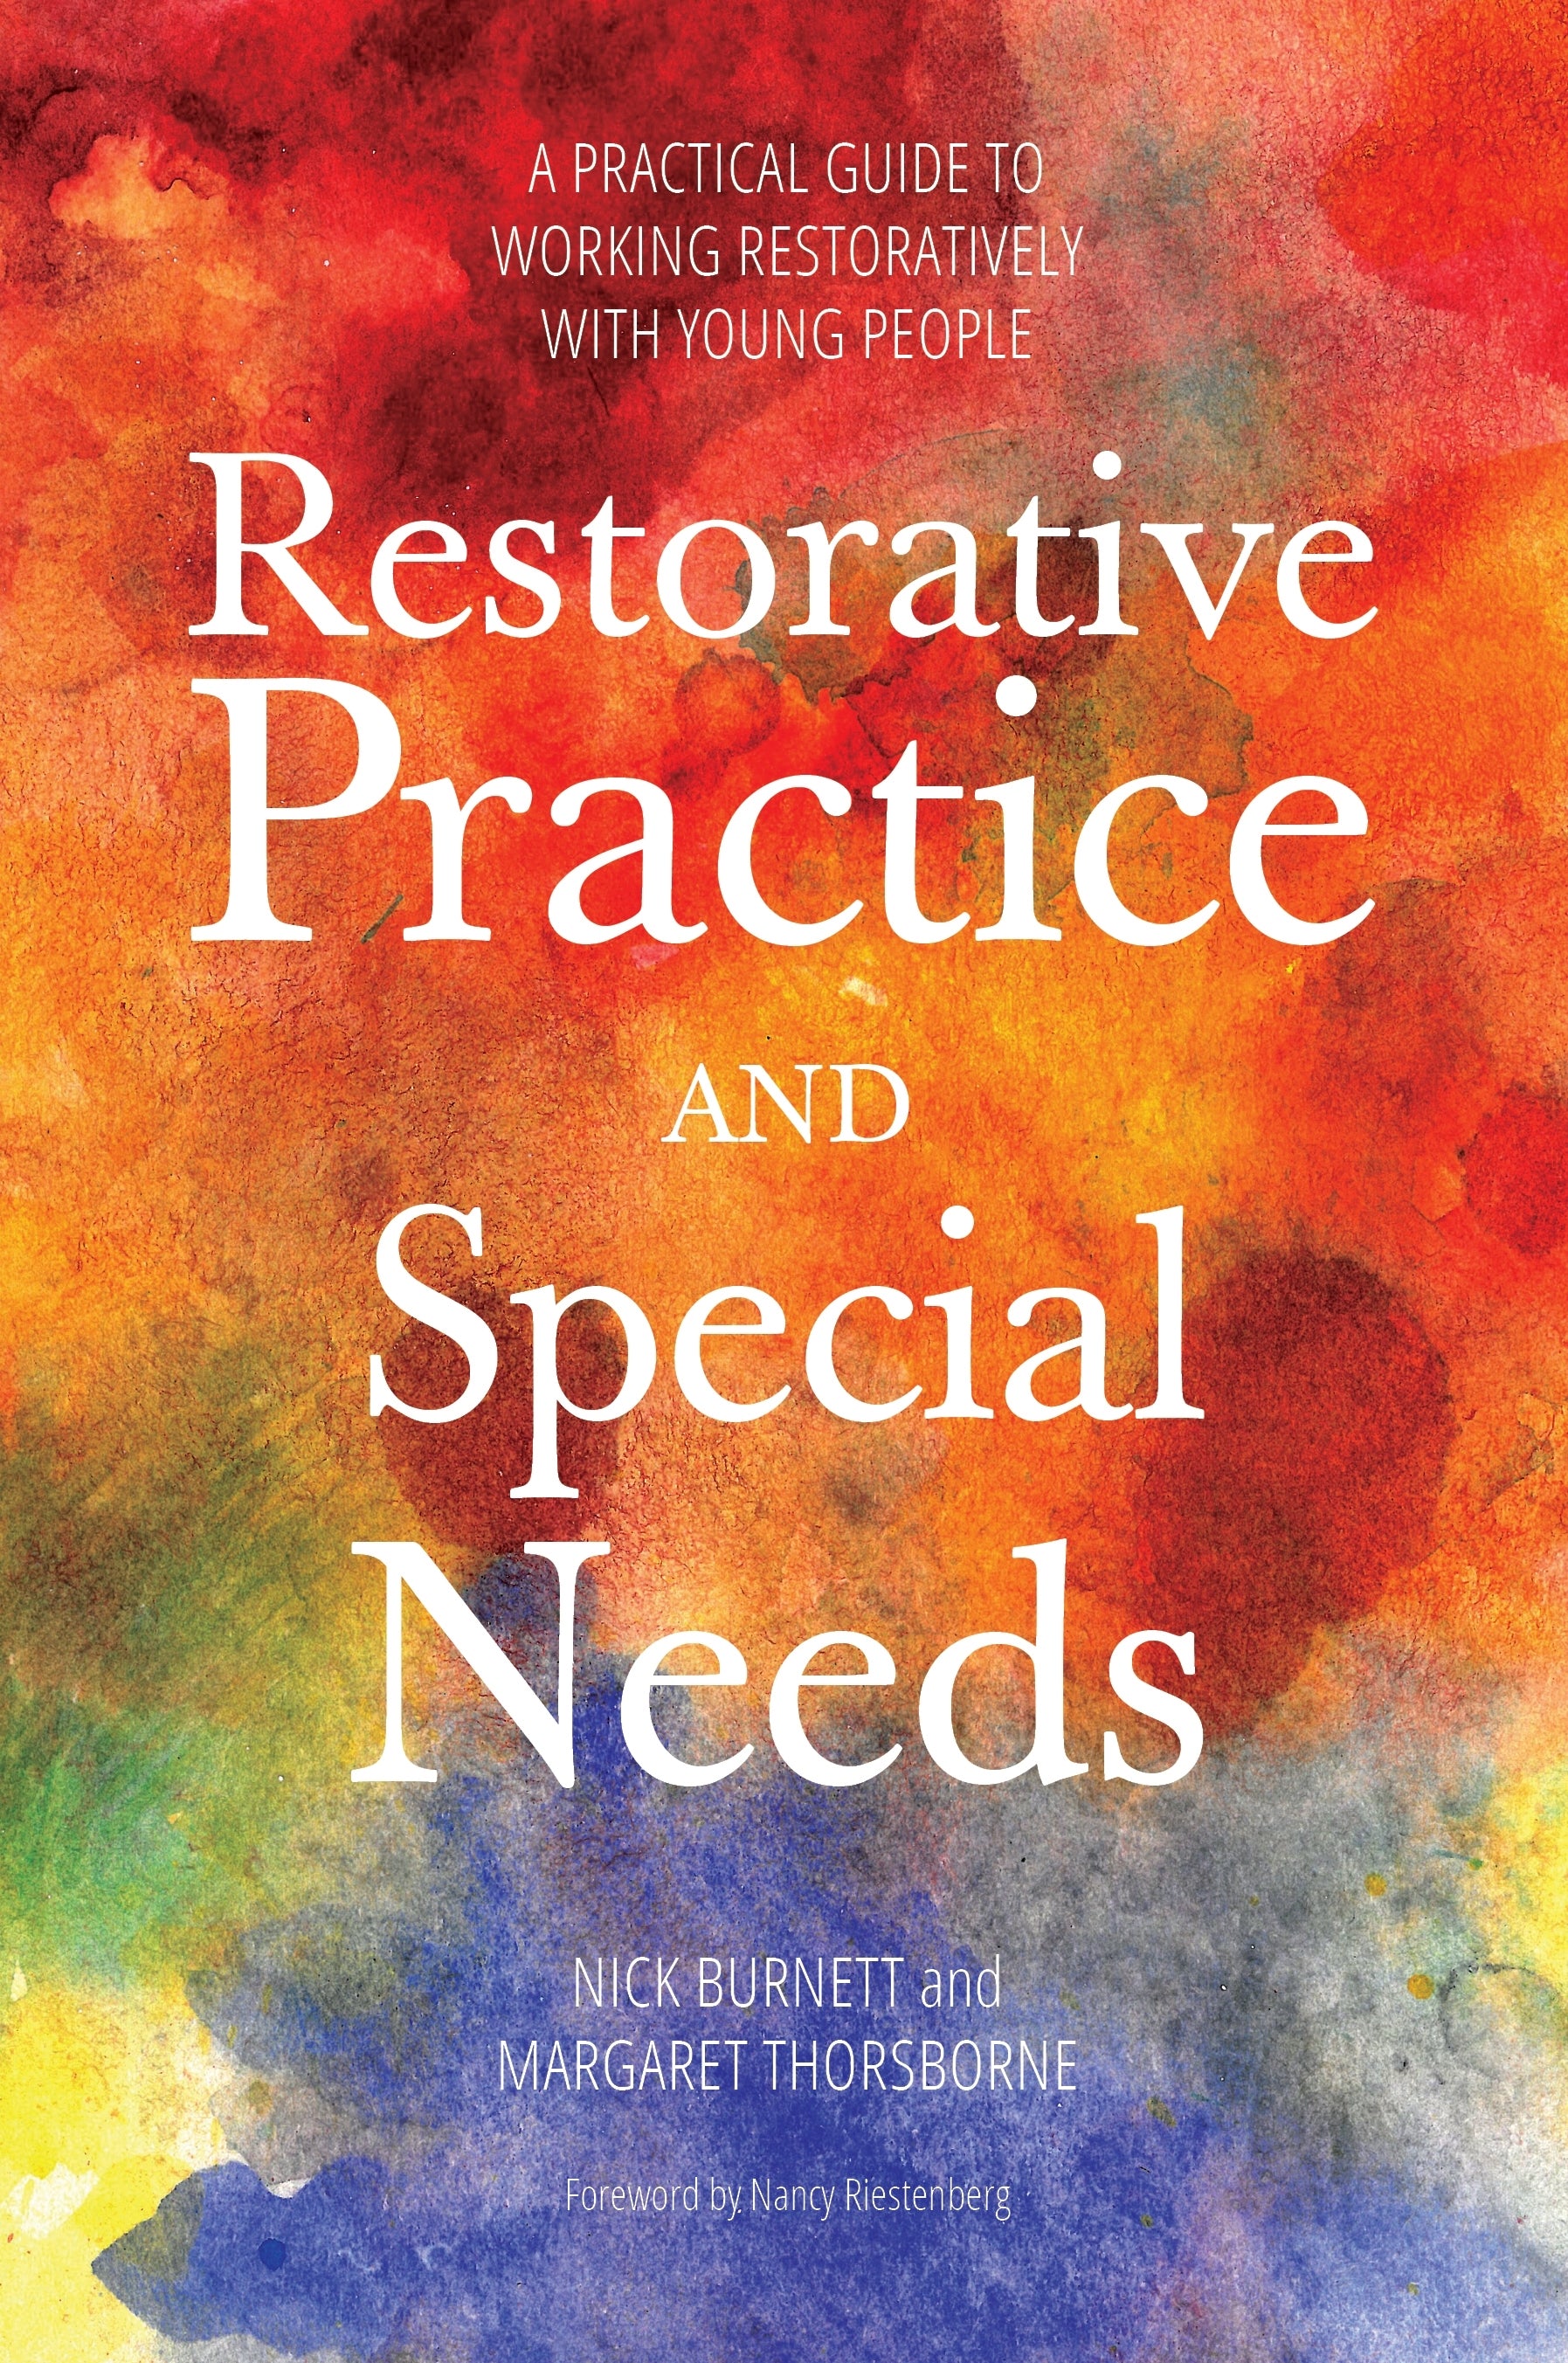 Restorative Practice and Special Needs by Nicholas Burnett, Margaret Thorsborne, Nancy Riestenberg